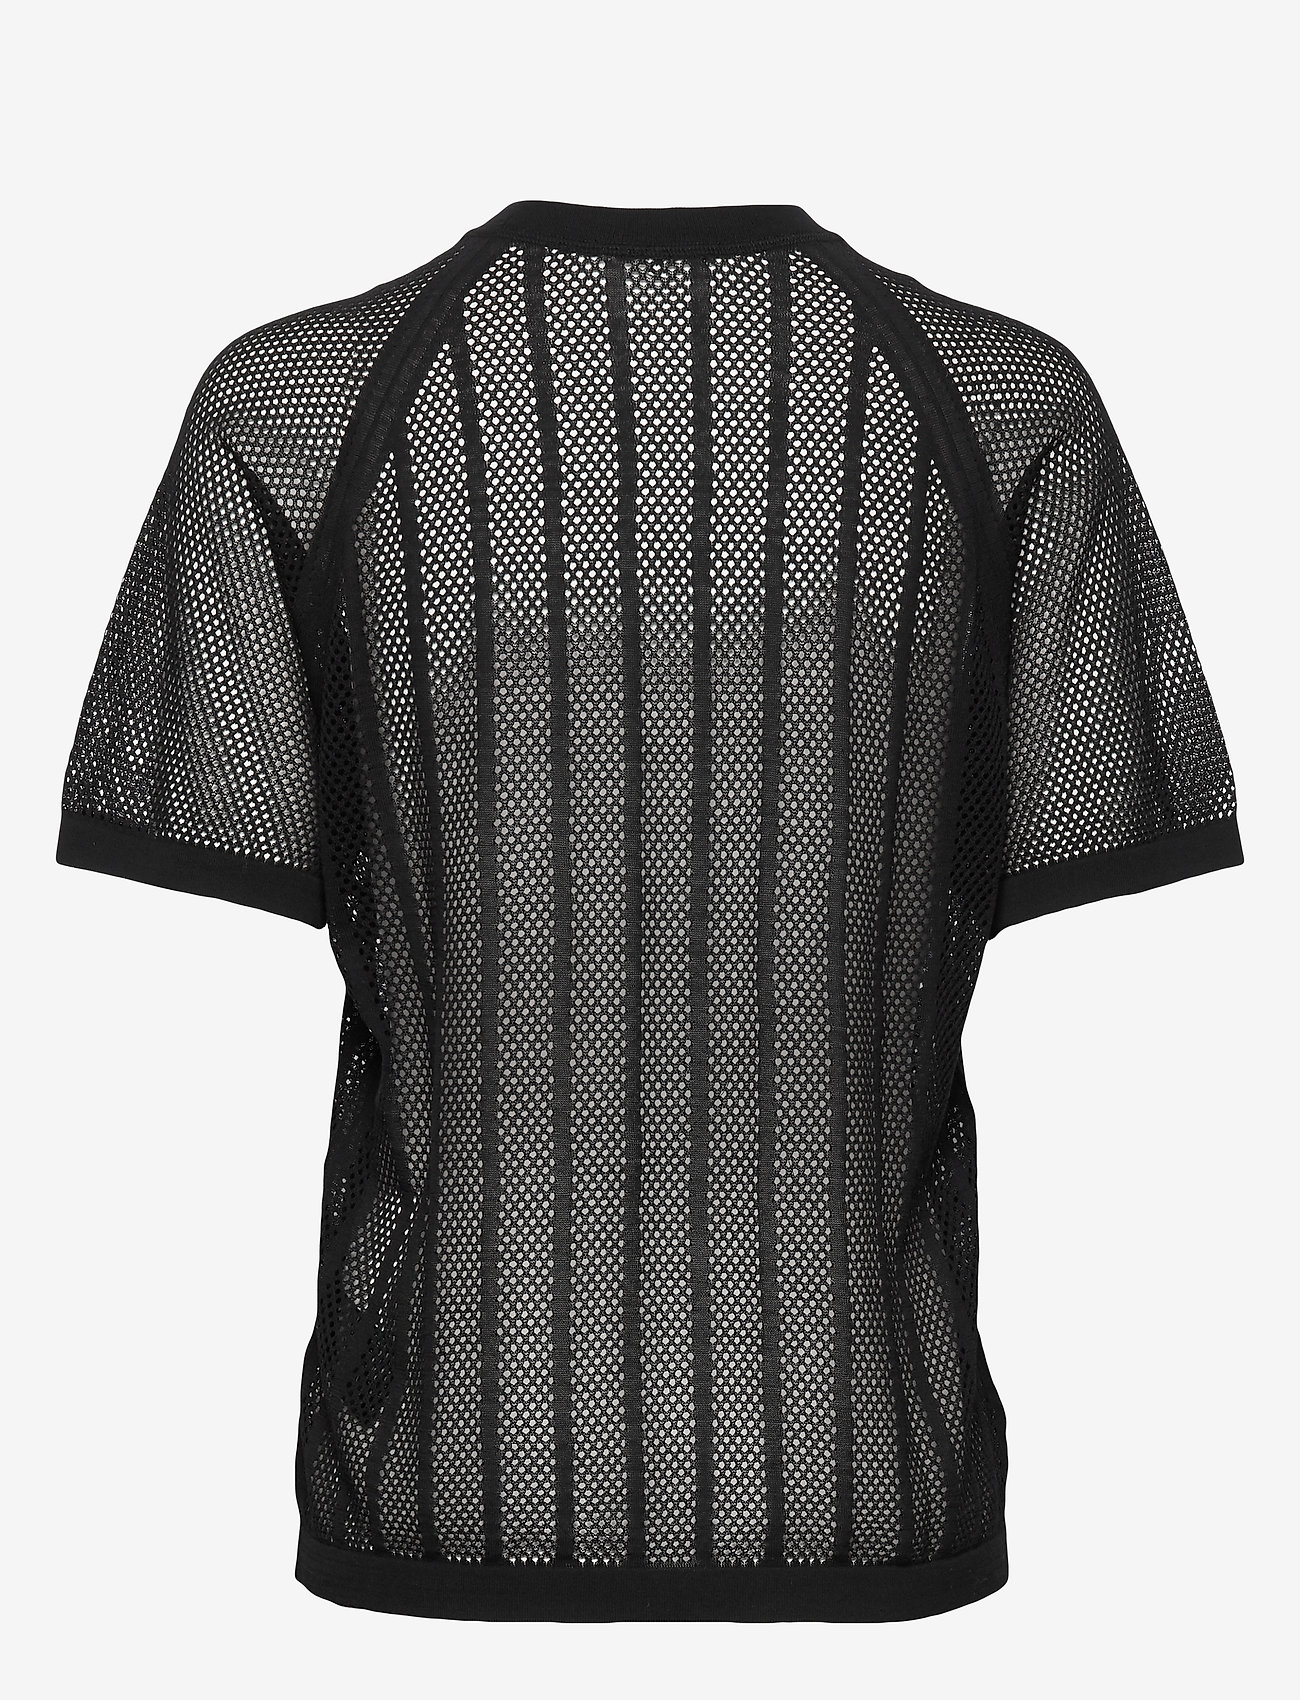 Filippa K - Cotton Mesh Knit Top - t-skjorter - black - 1